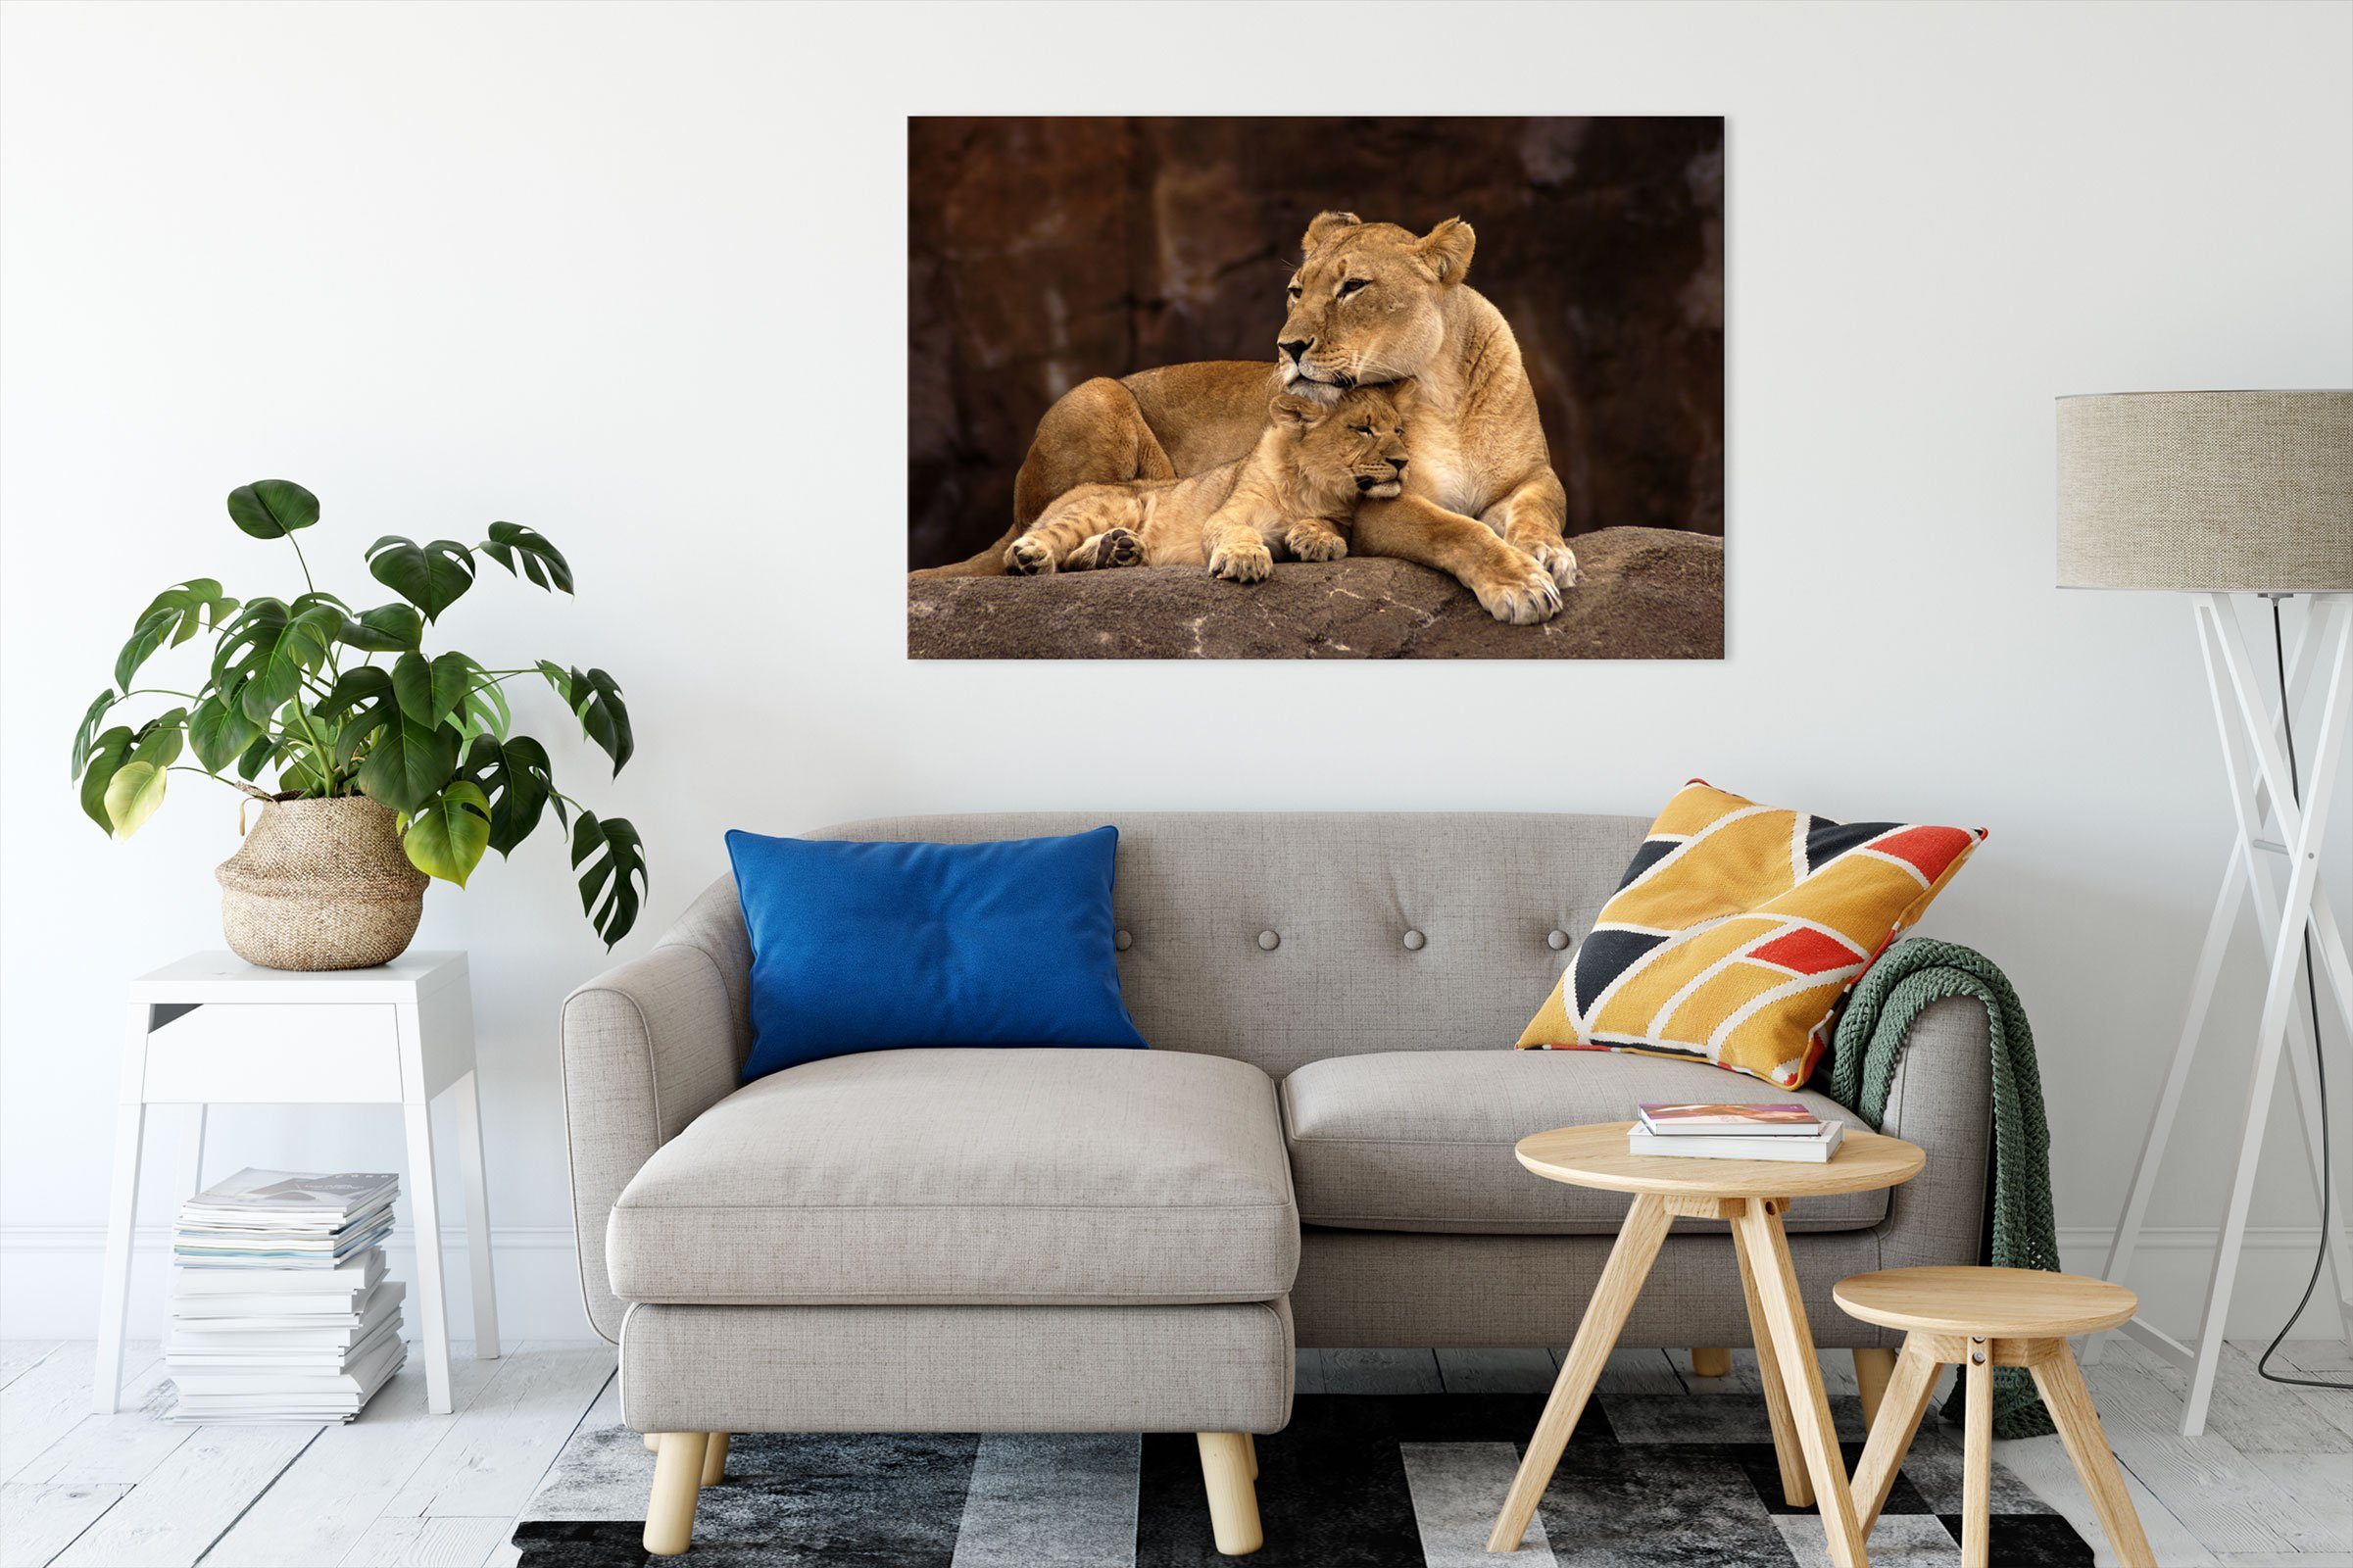 mit Löwenjungen, Pixxprint Leinwandbild fertig mit Löwe inkl. Löwenjungen (1 Zackenaufhänger bespannt, Löwe Leinwandbild St),